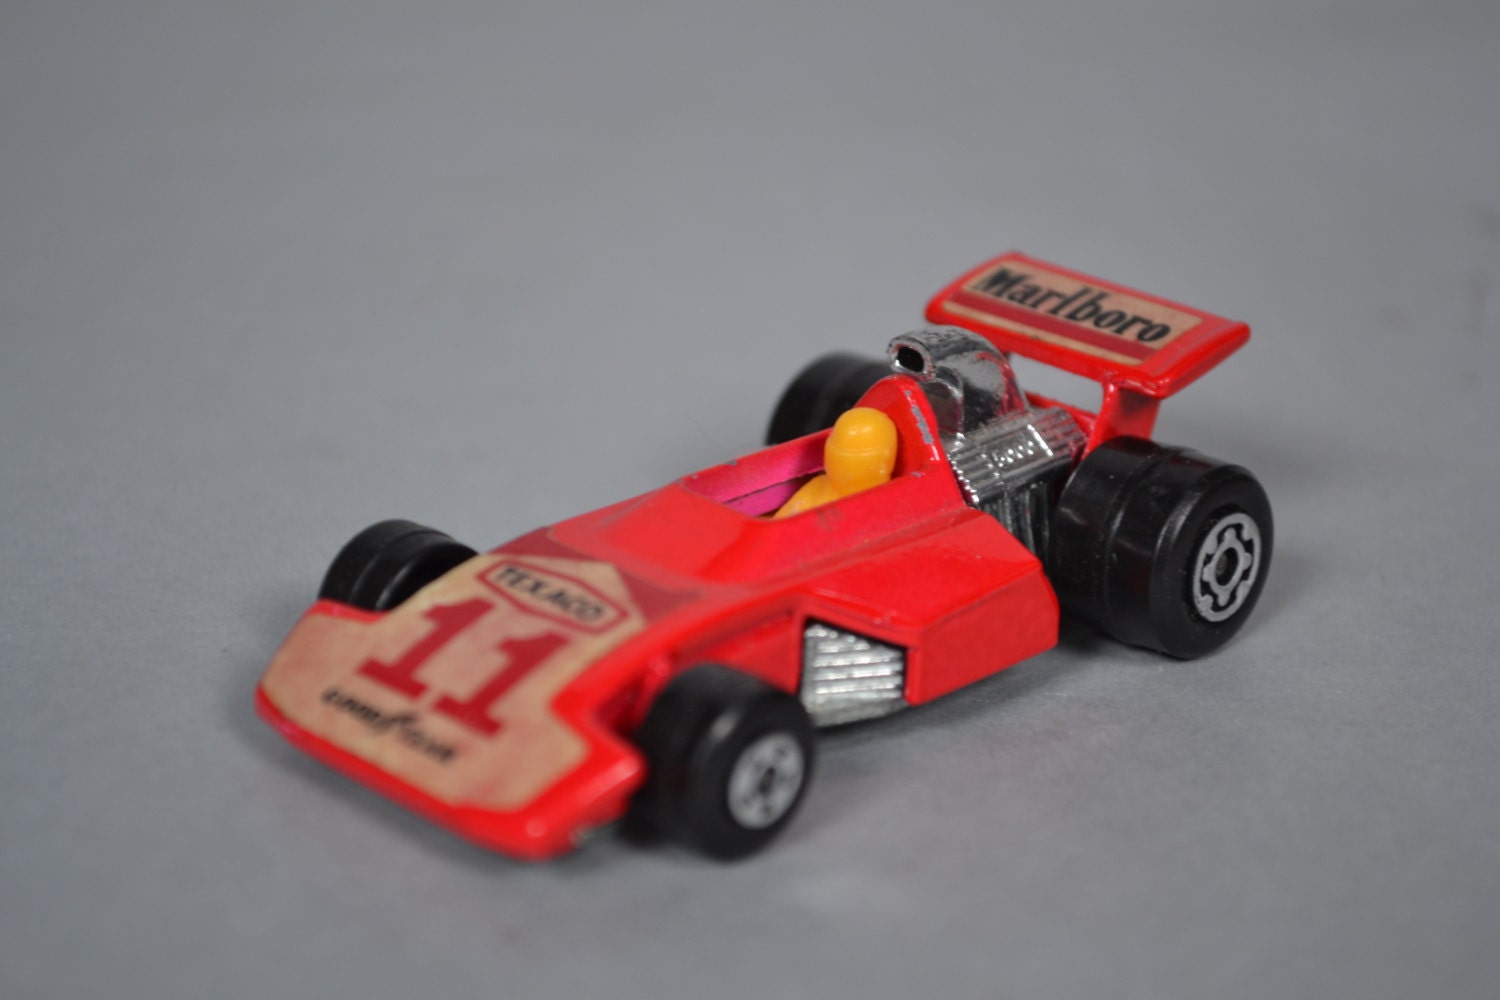 Miniature Toys Toys & Games Toys Racing diecast Racing Car Vintage race ...